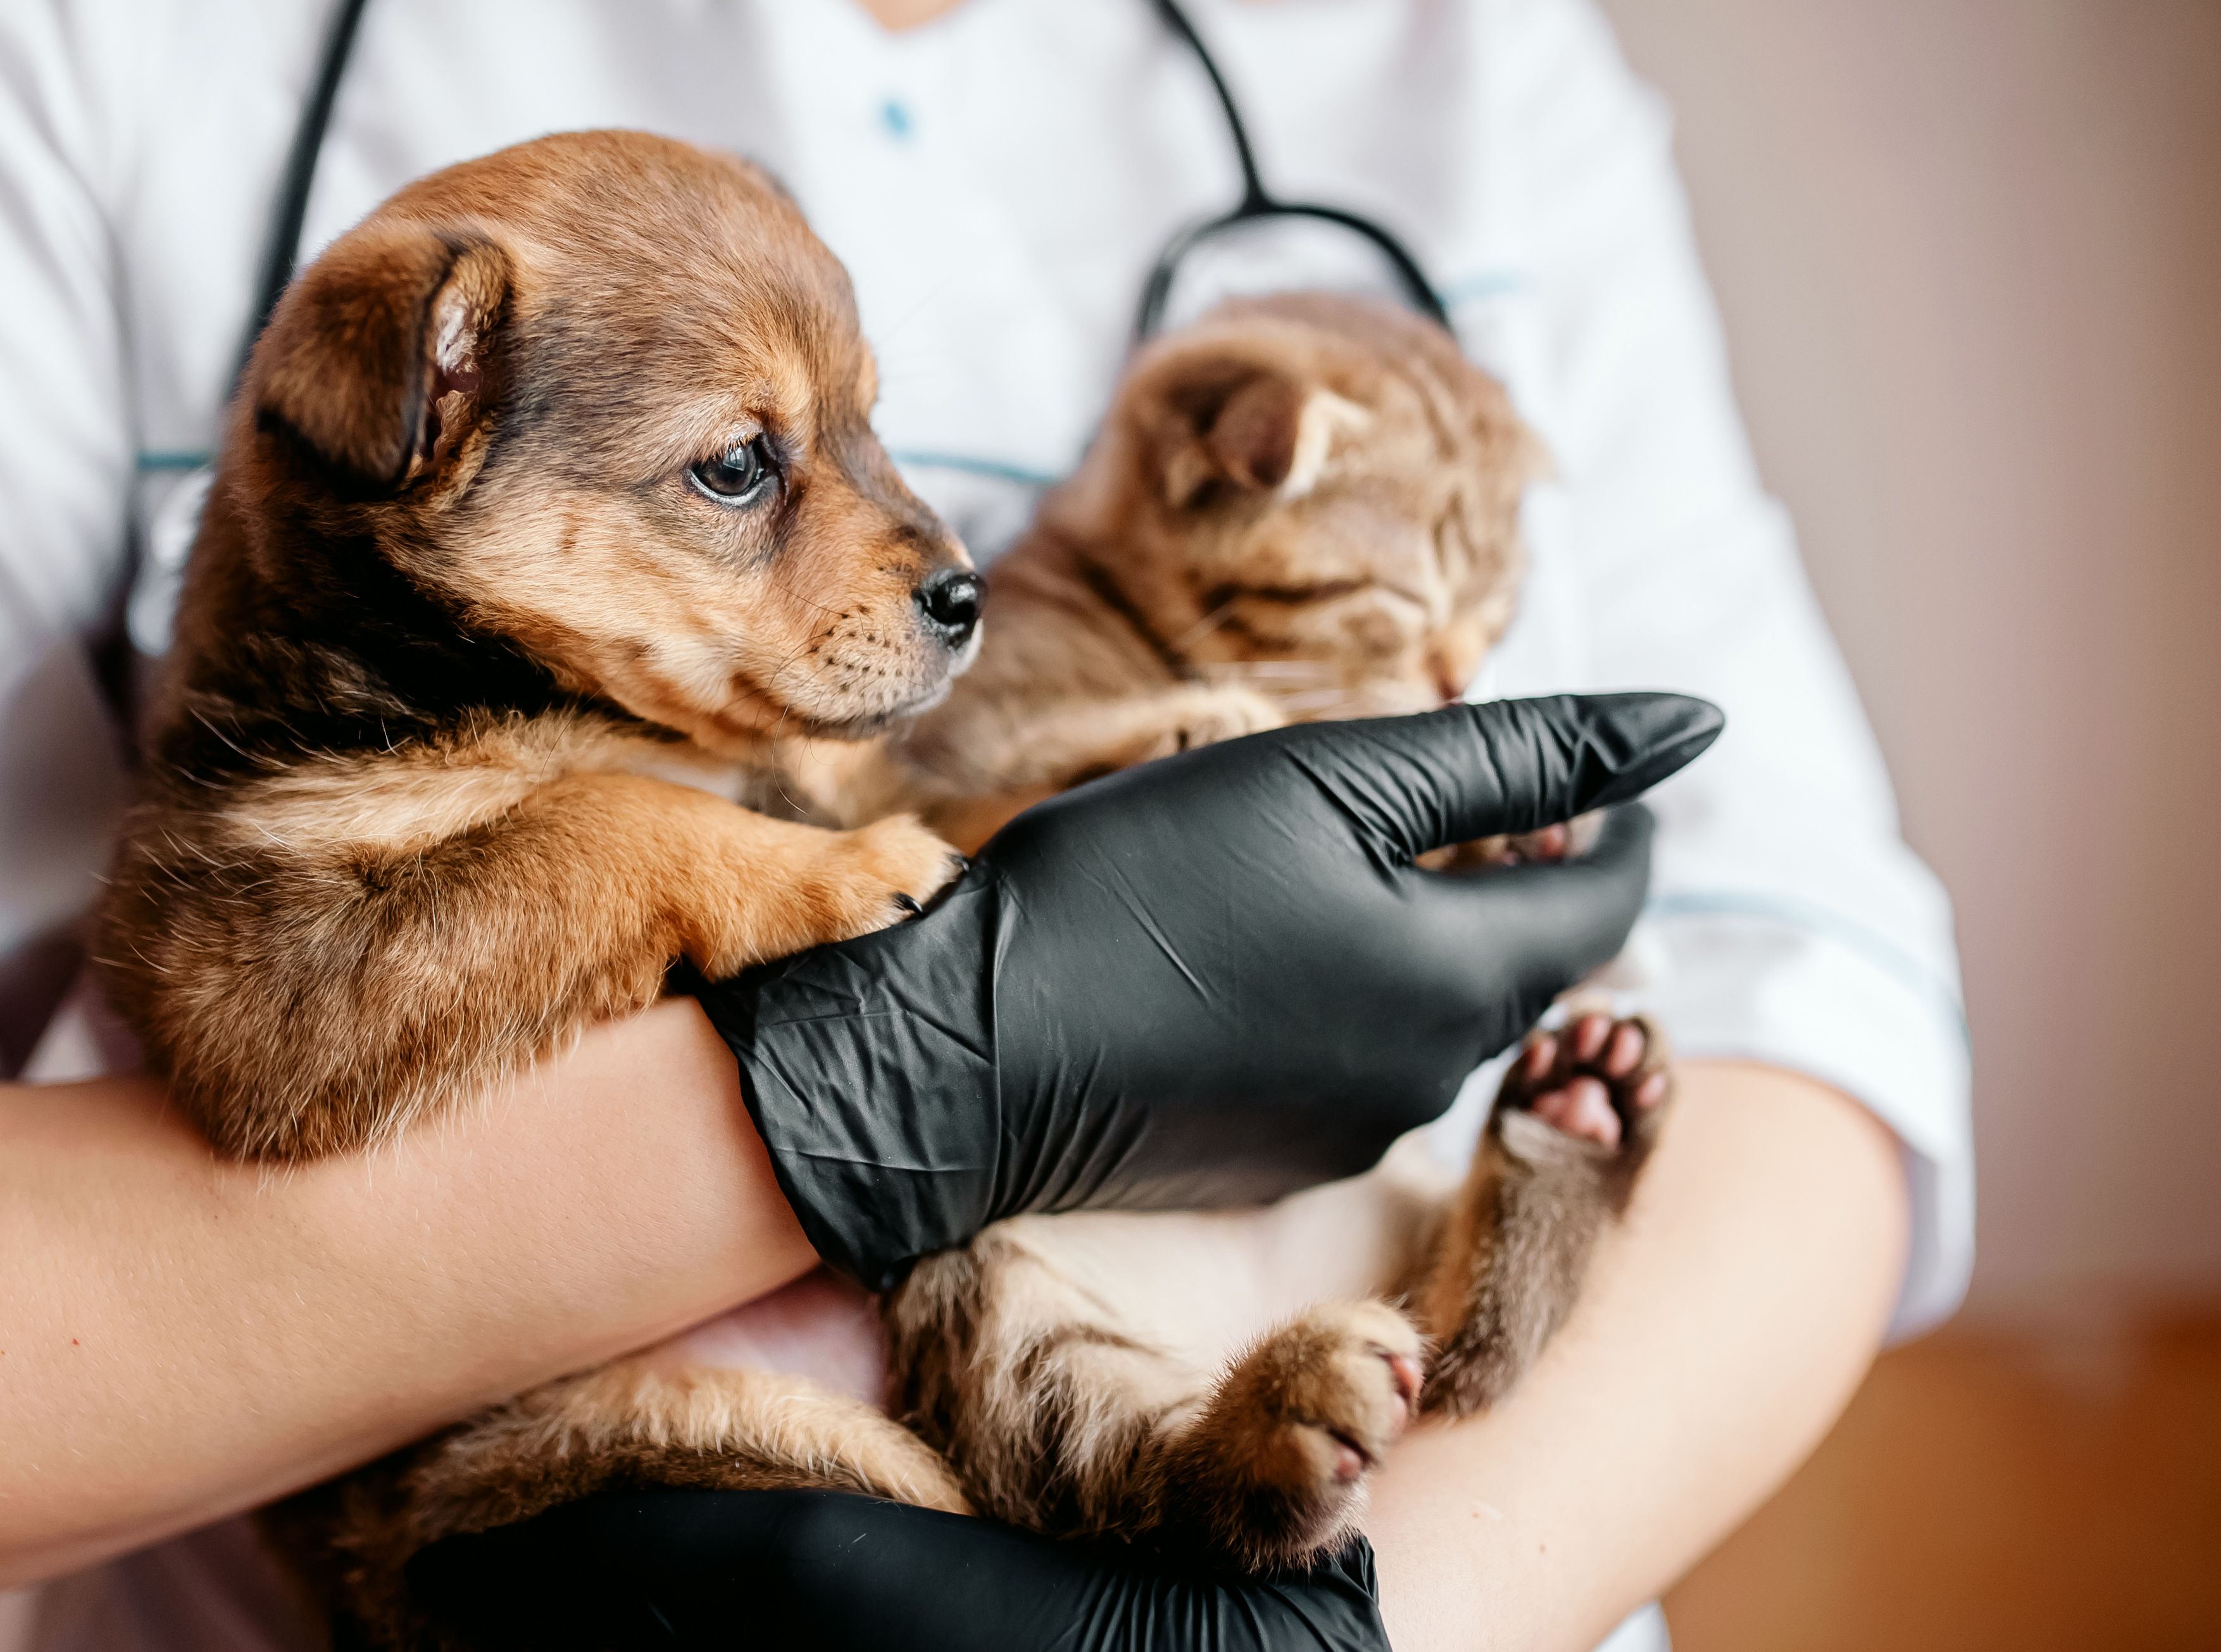 dermatitis research cat dog